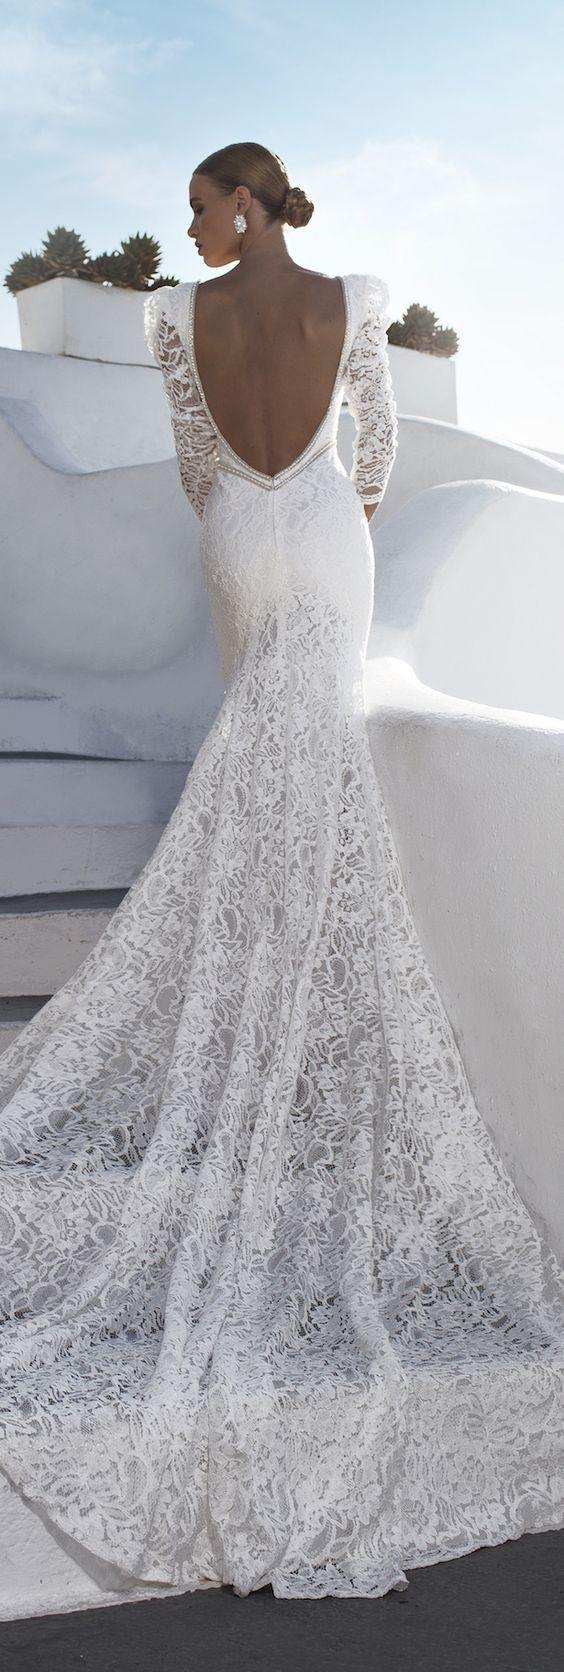 زفاف - 50 Beautiful Lace Wedding Dresses To Die For